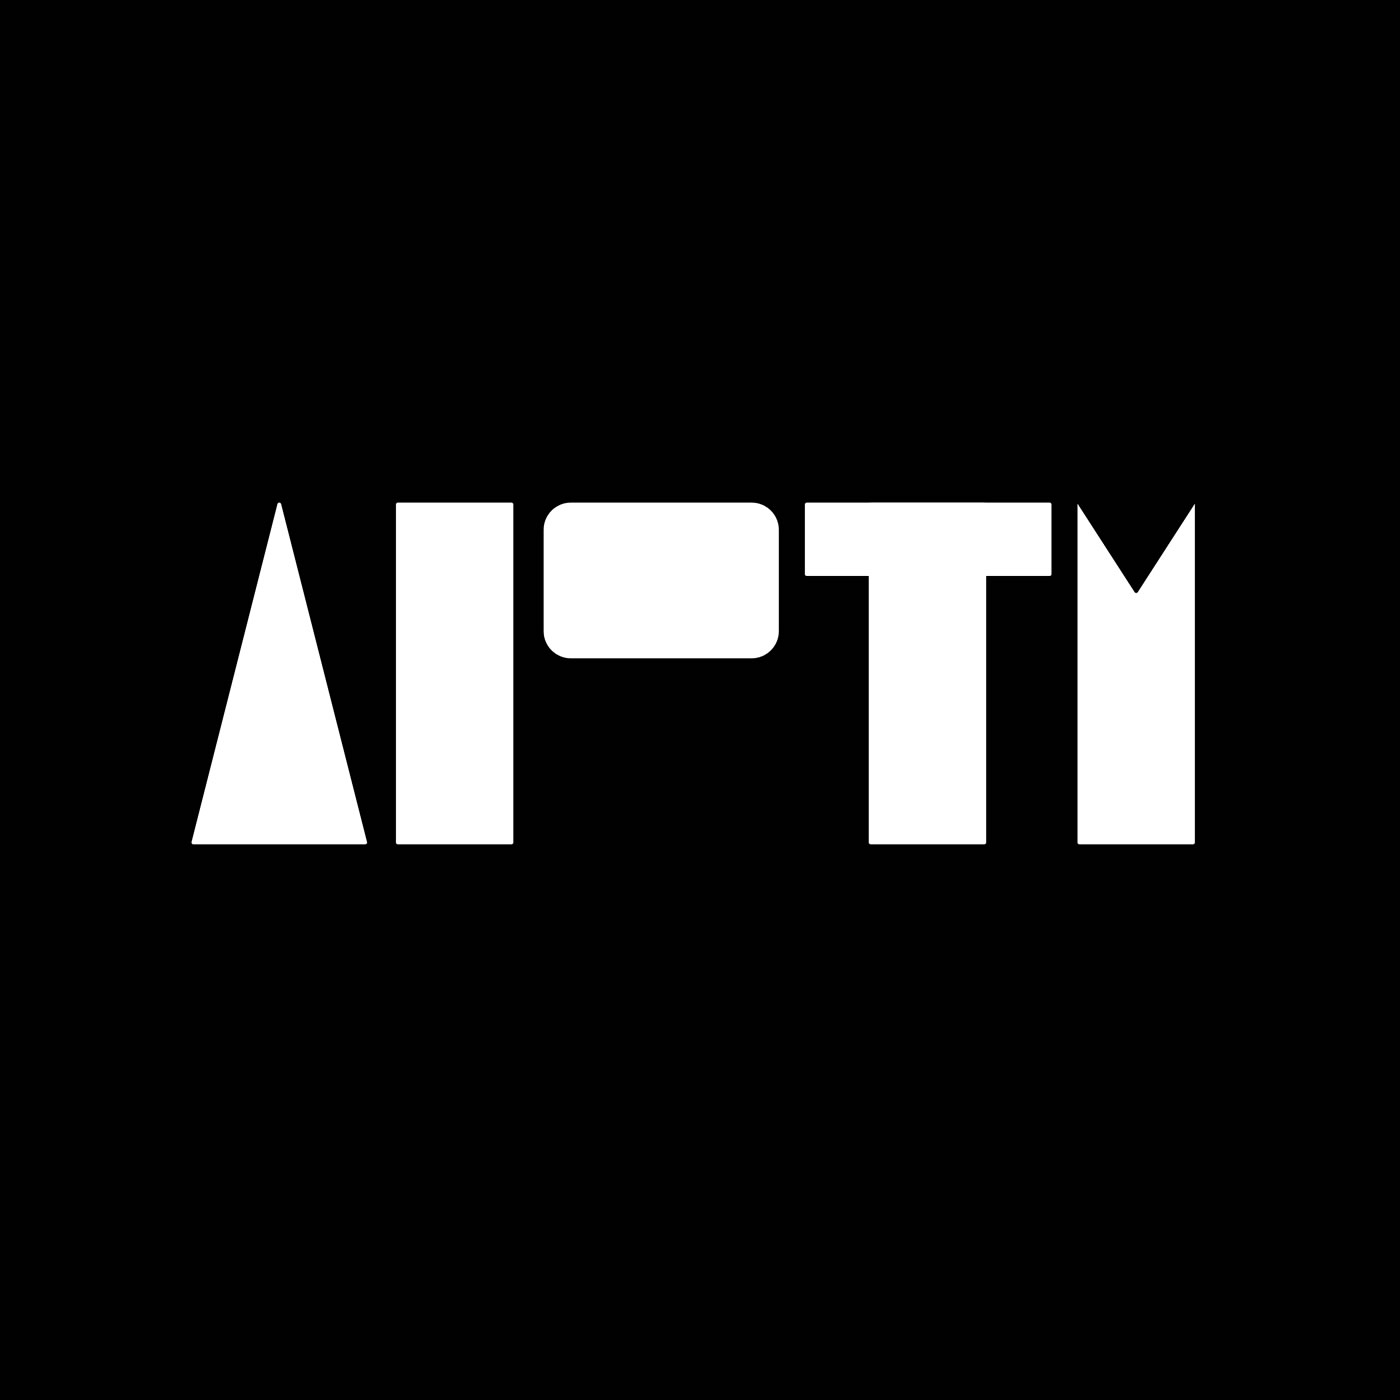 AIOTM - Video Series #2